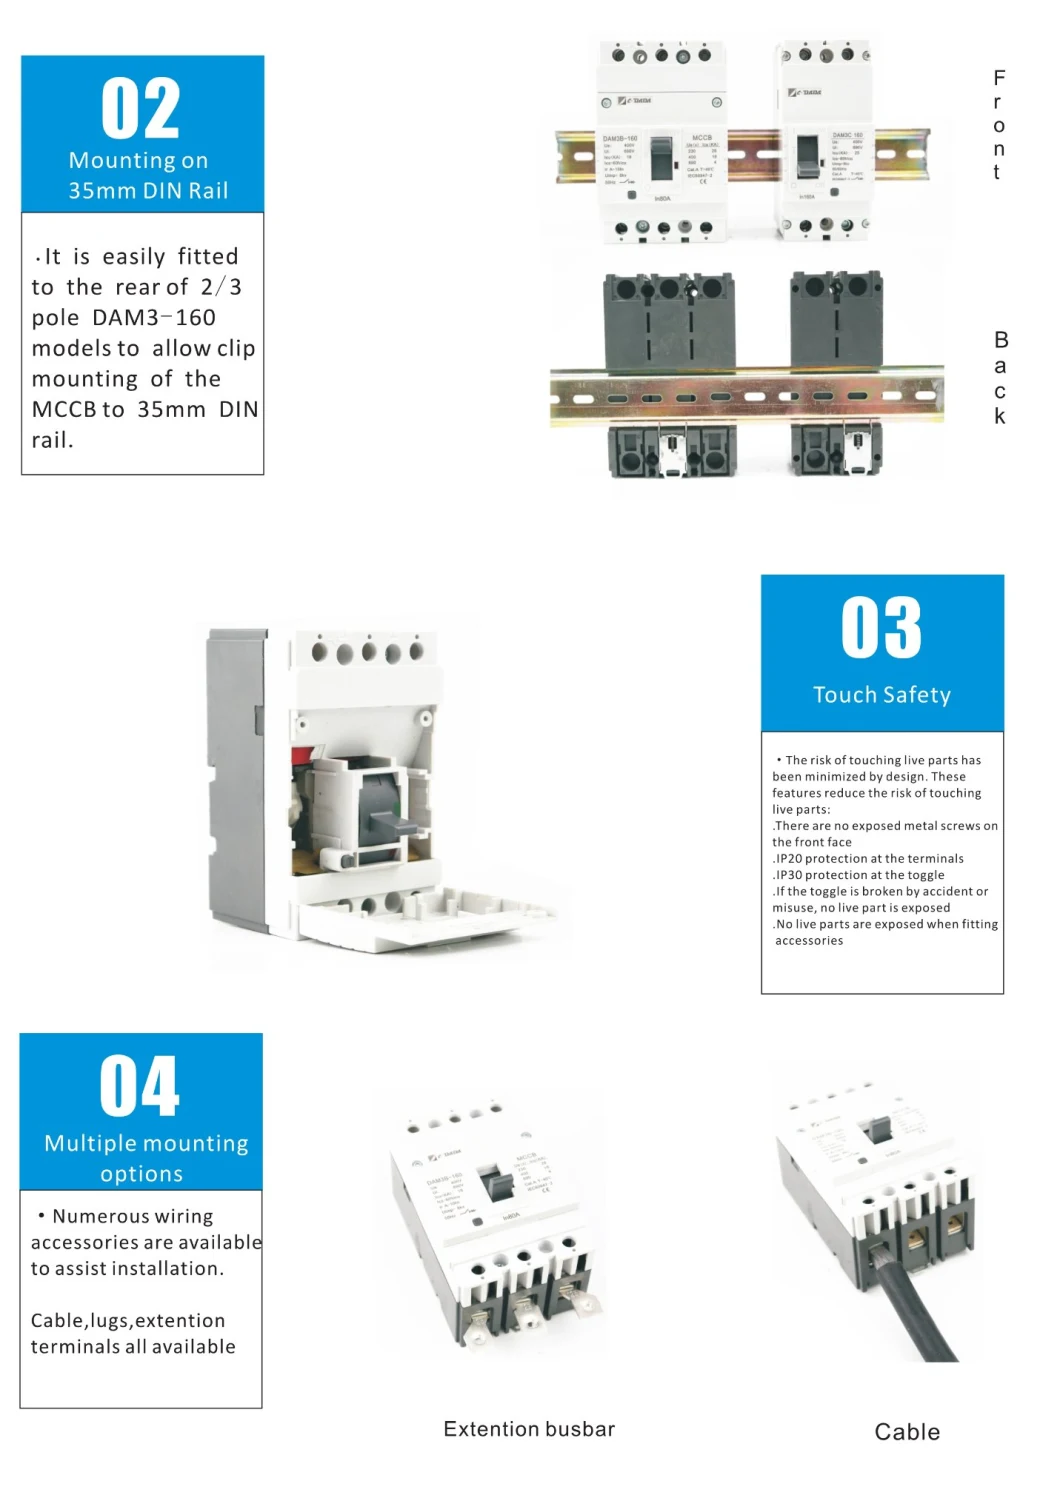 Dam3-1600 3p CB Ce Molded Case Circuit Breaker MCCB